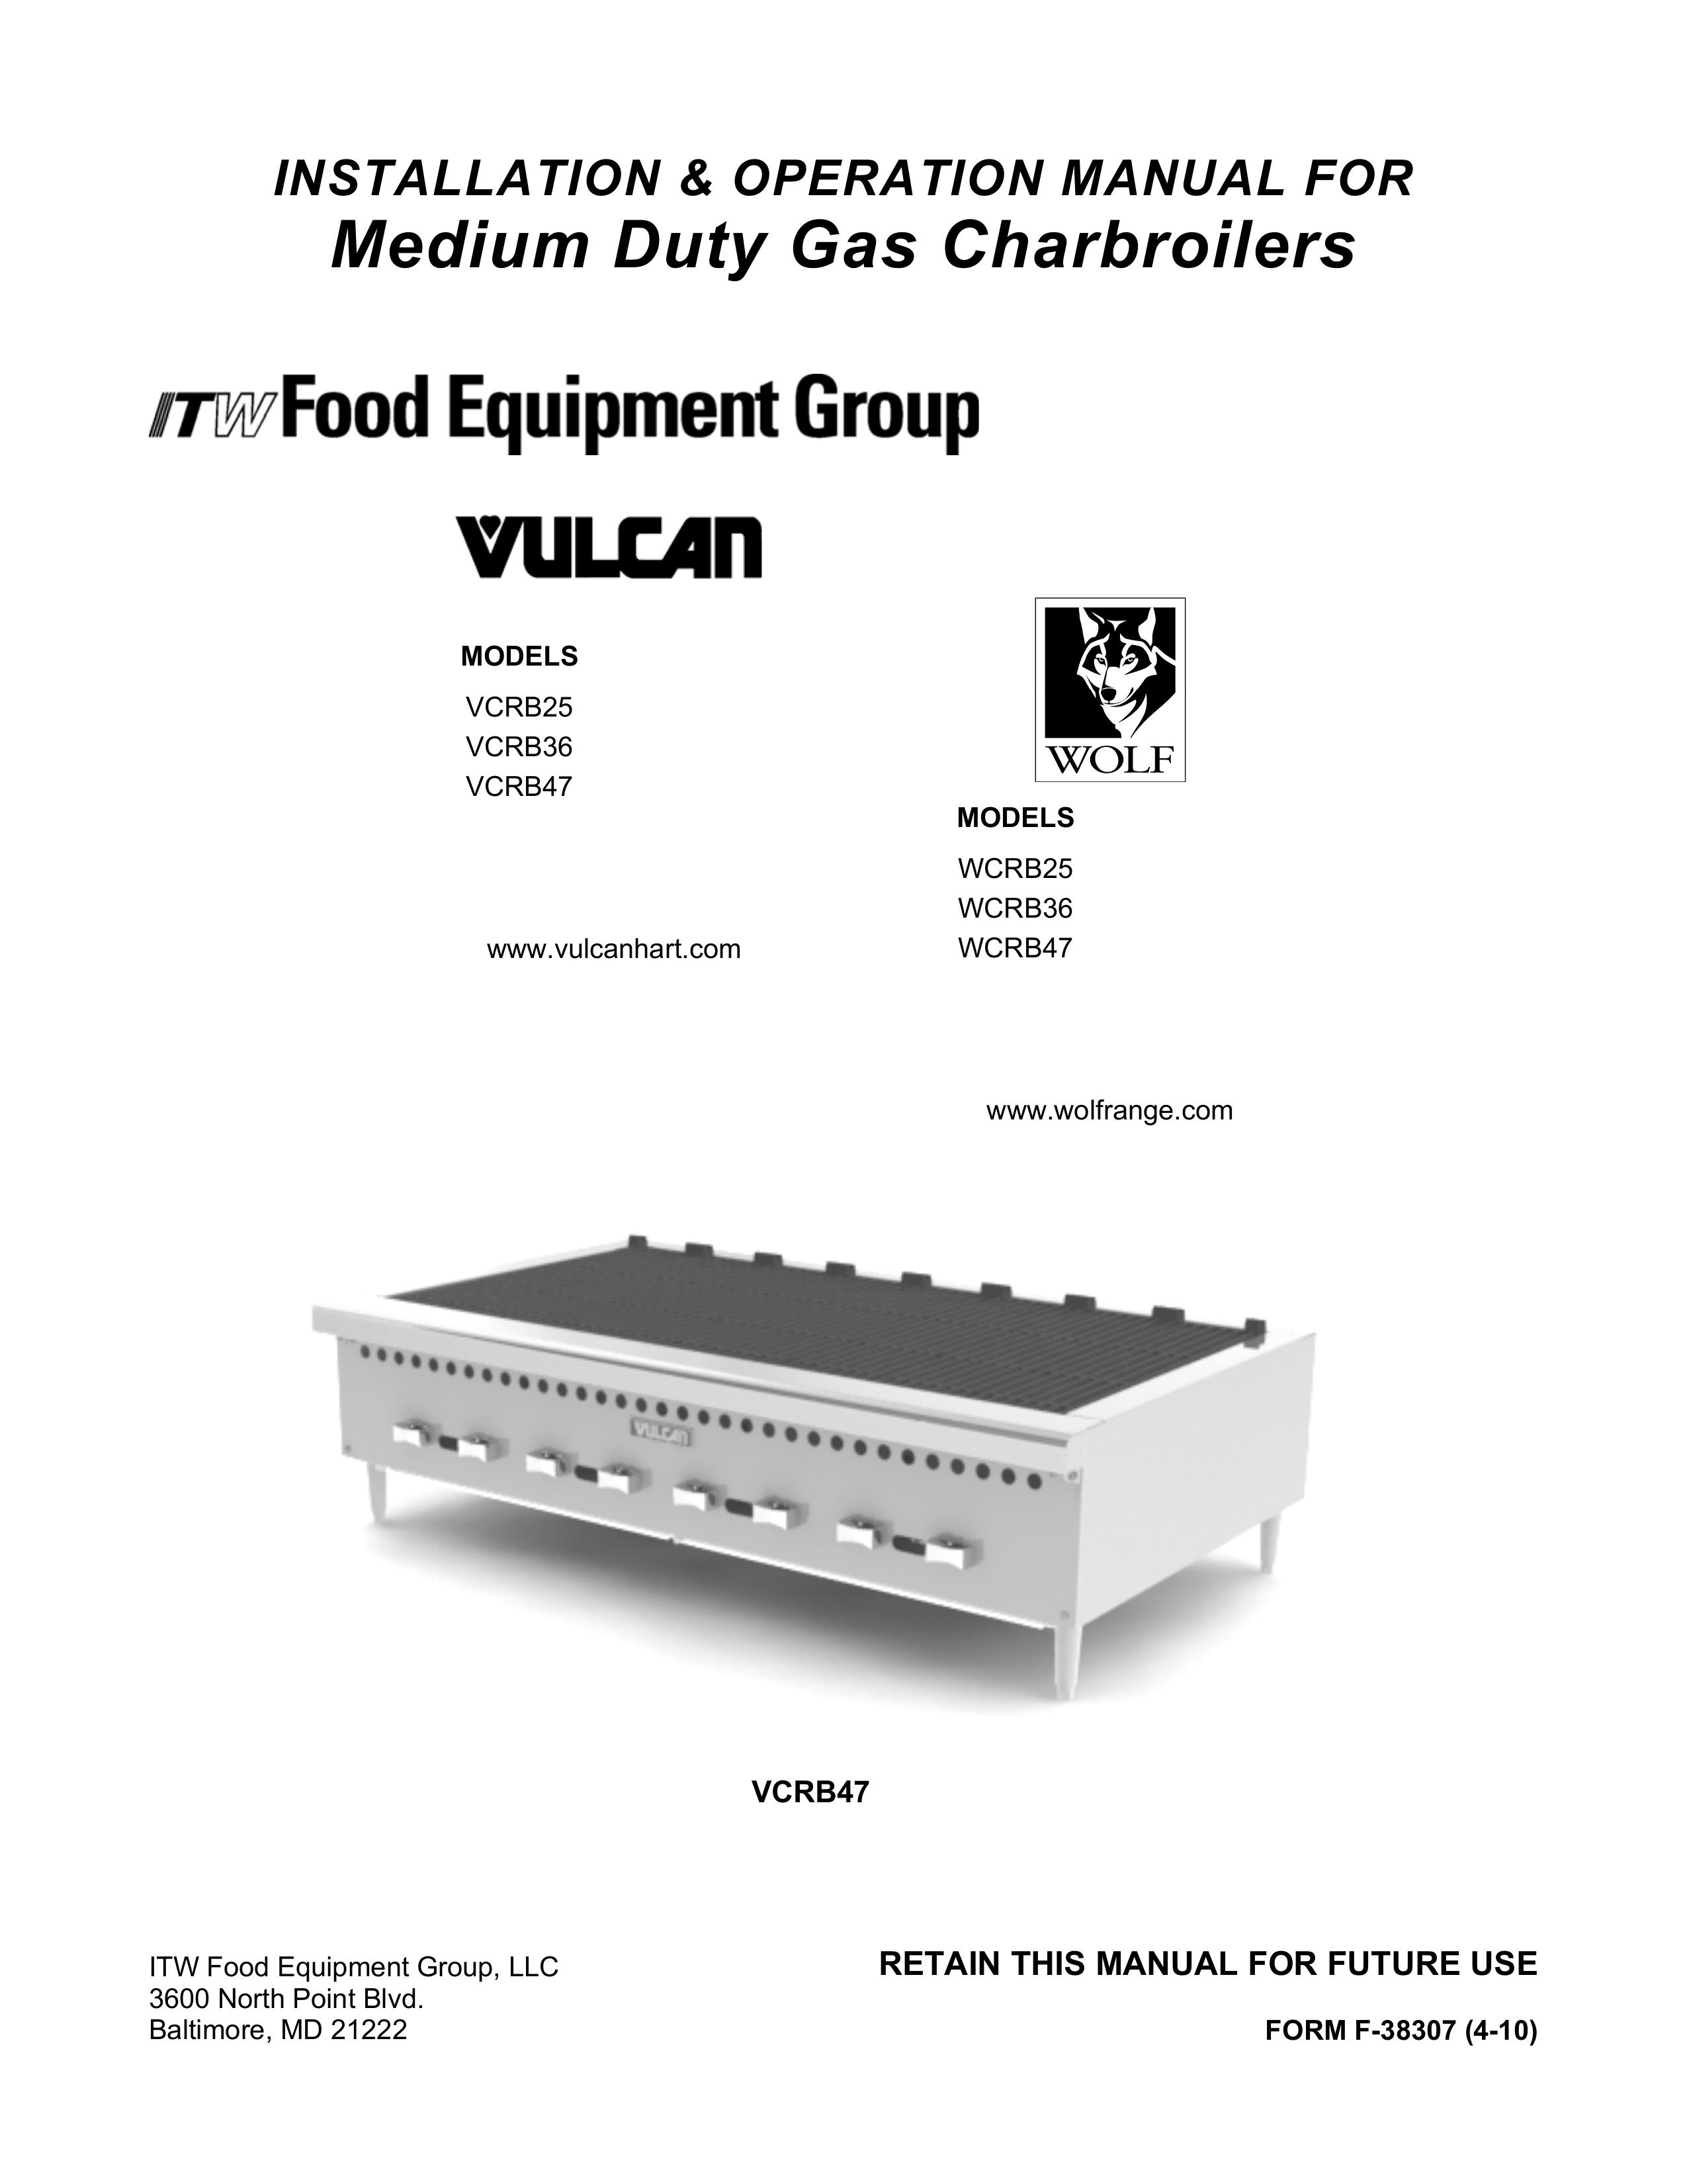 Vulcan-Hart VCRB25 Charcoal Grill User Manual